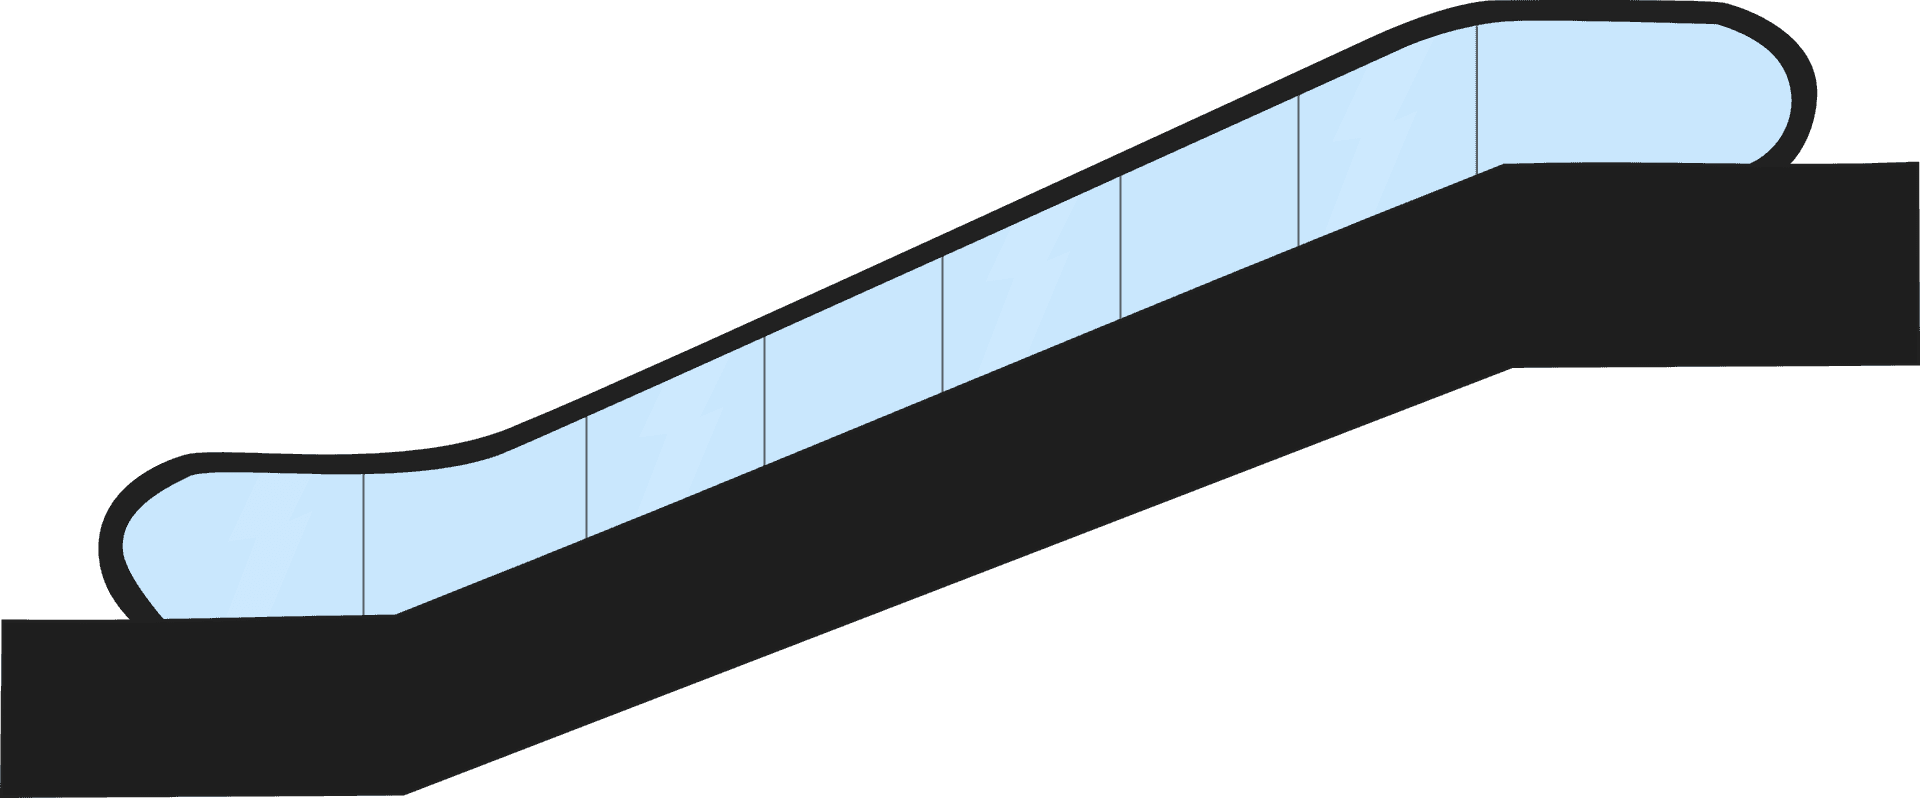 Modern Escalator Graphic PNG